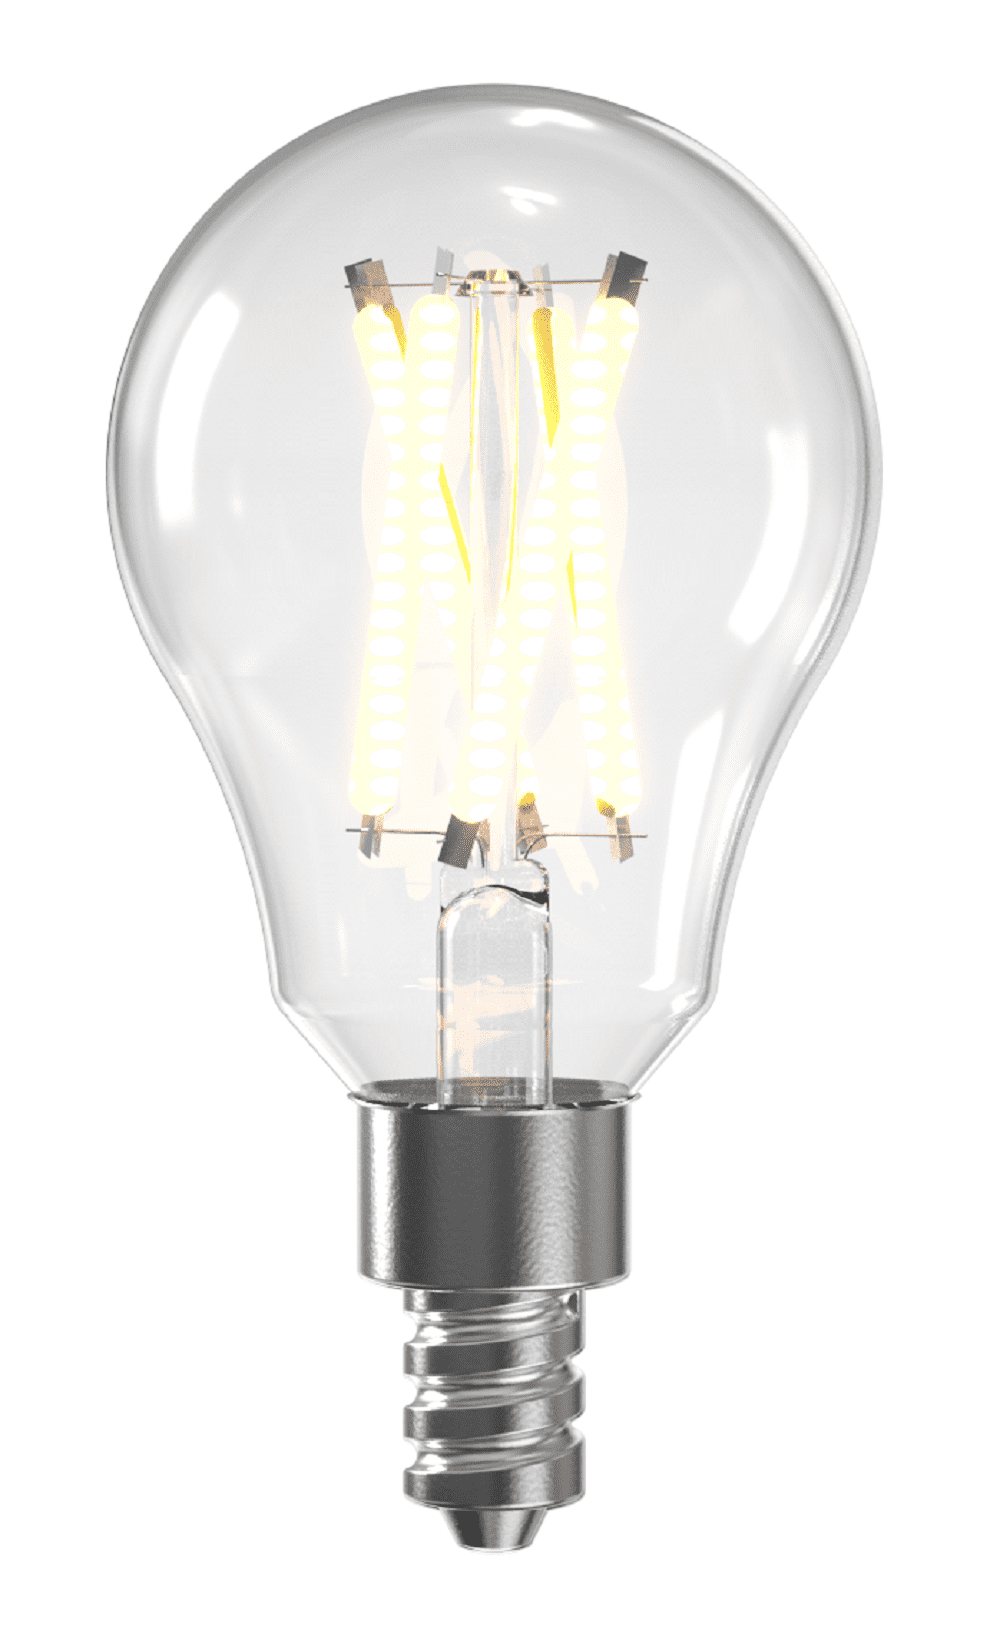 50 x 25w Clear GLS Light Bulb Lamp BC Bayonet Cap B22 Push In Bulbs Great Value! 